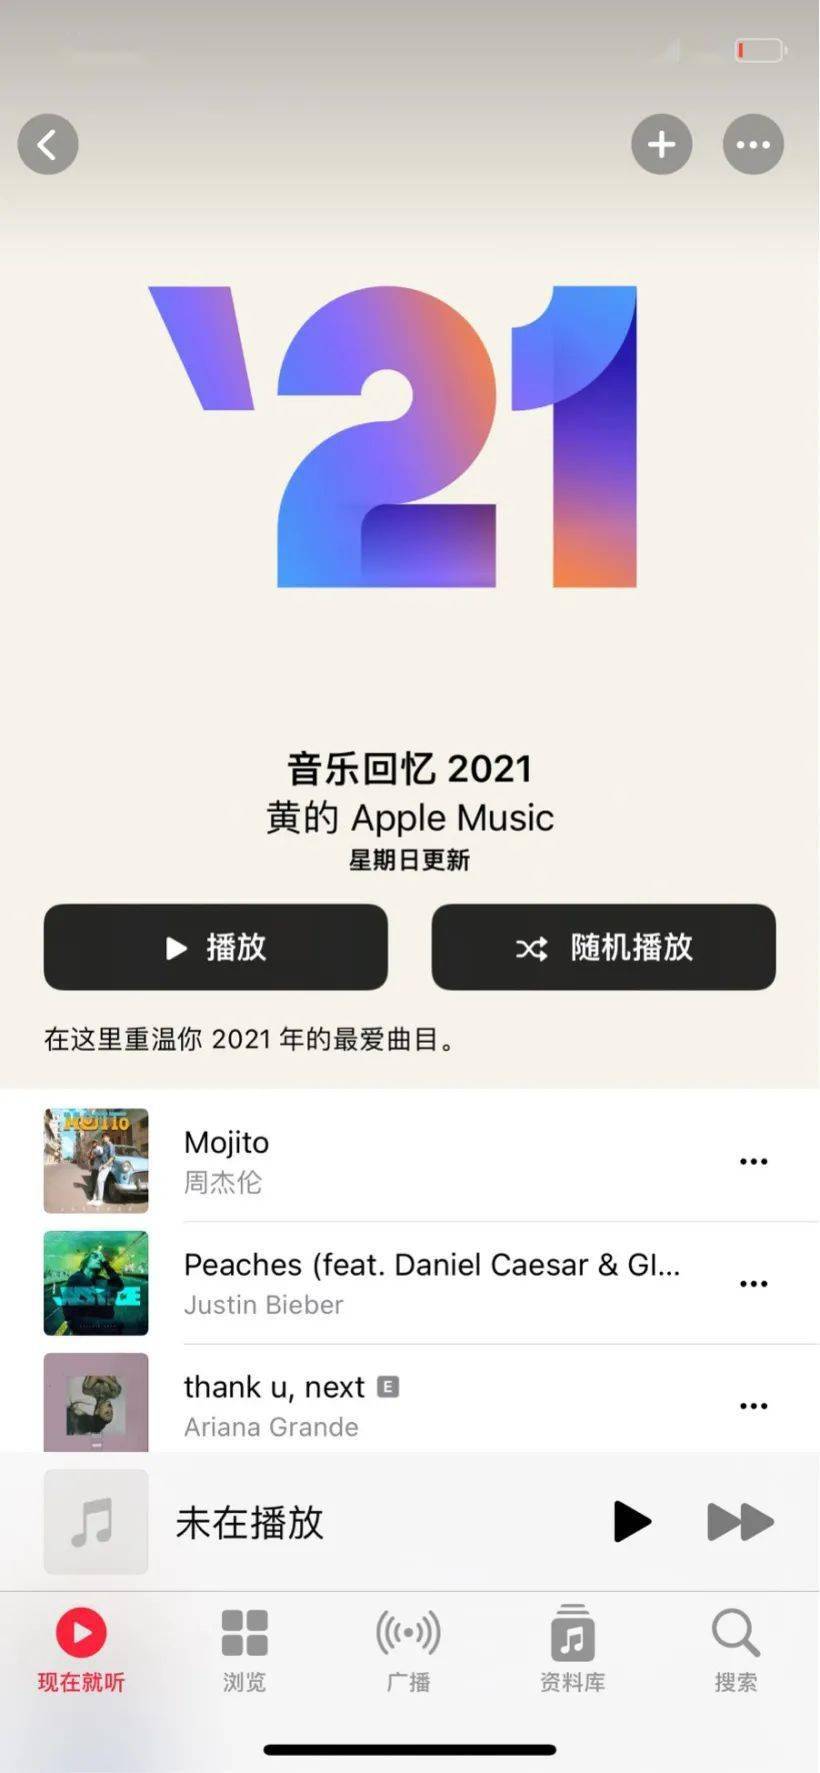 Music|小米 12 系列正式发布 / Apple Music 发布 2021 音乐回忆歌单 / 斗鱼年度十大弹幕出炉